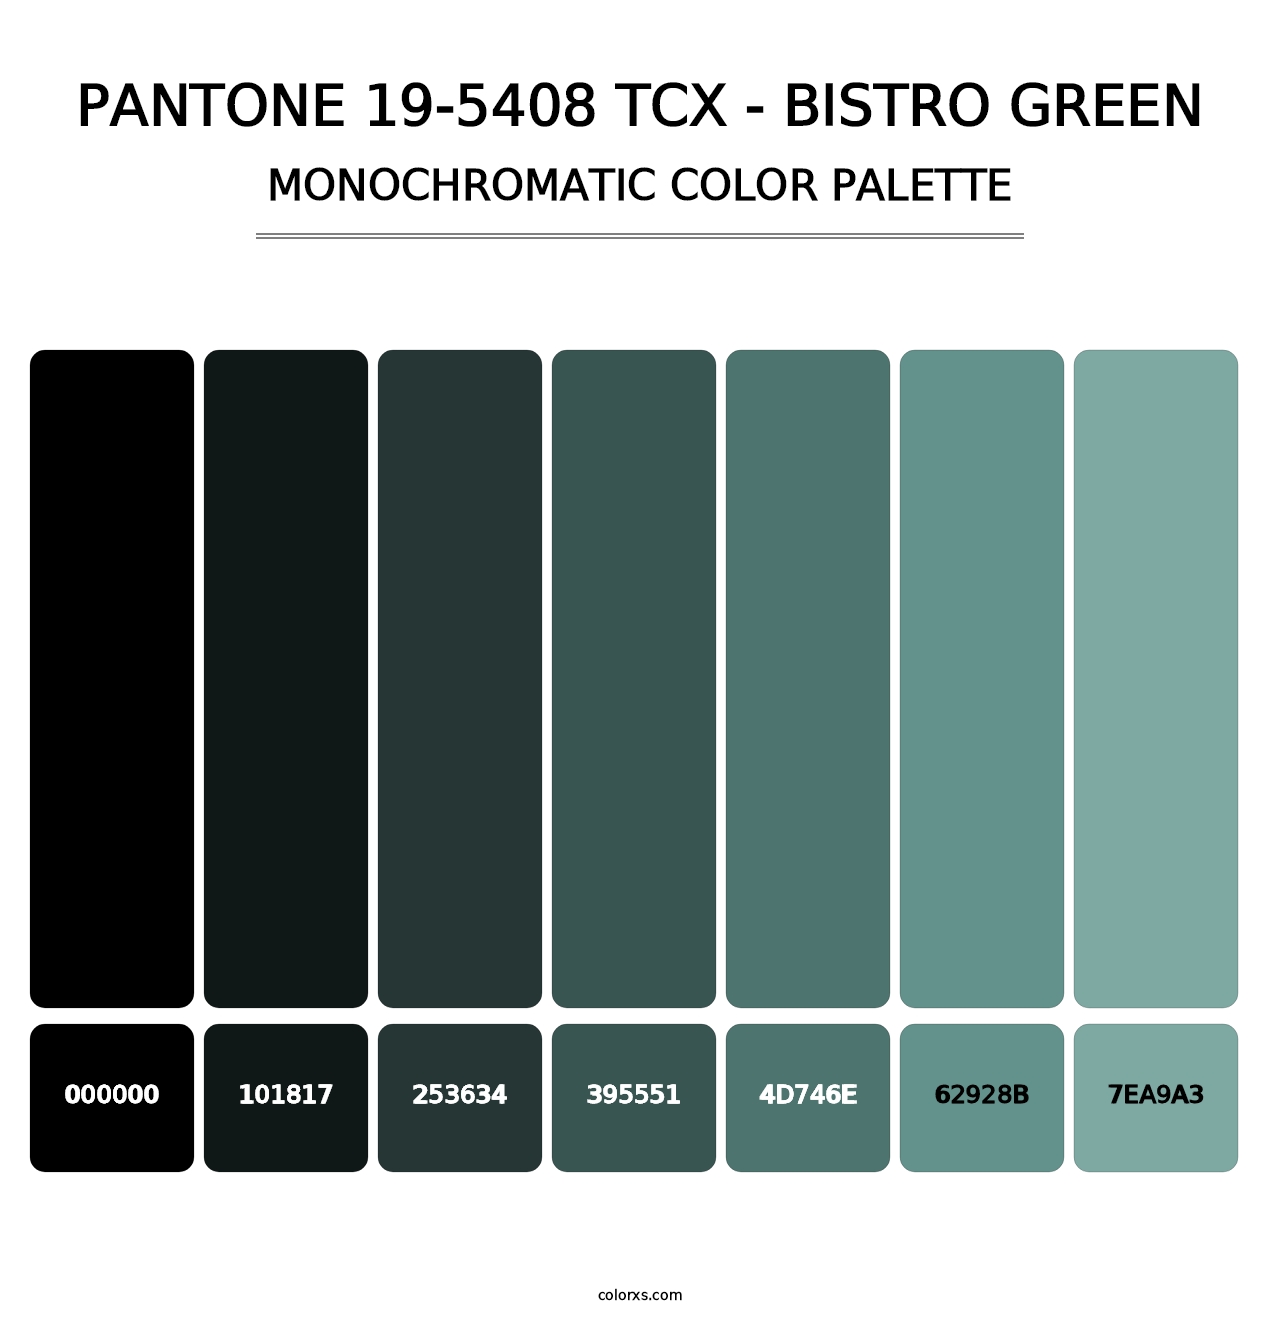 PANTONE 19-5408 TCX - Bistro Green - Monochromatic Color Palette